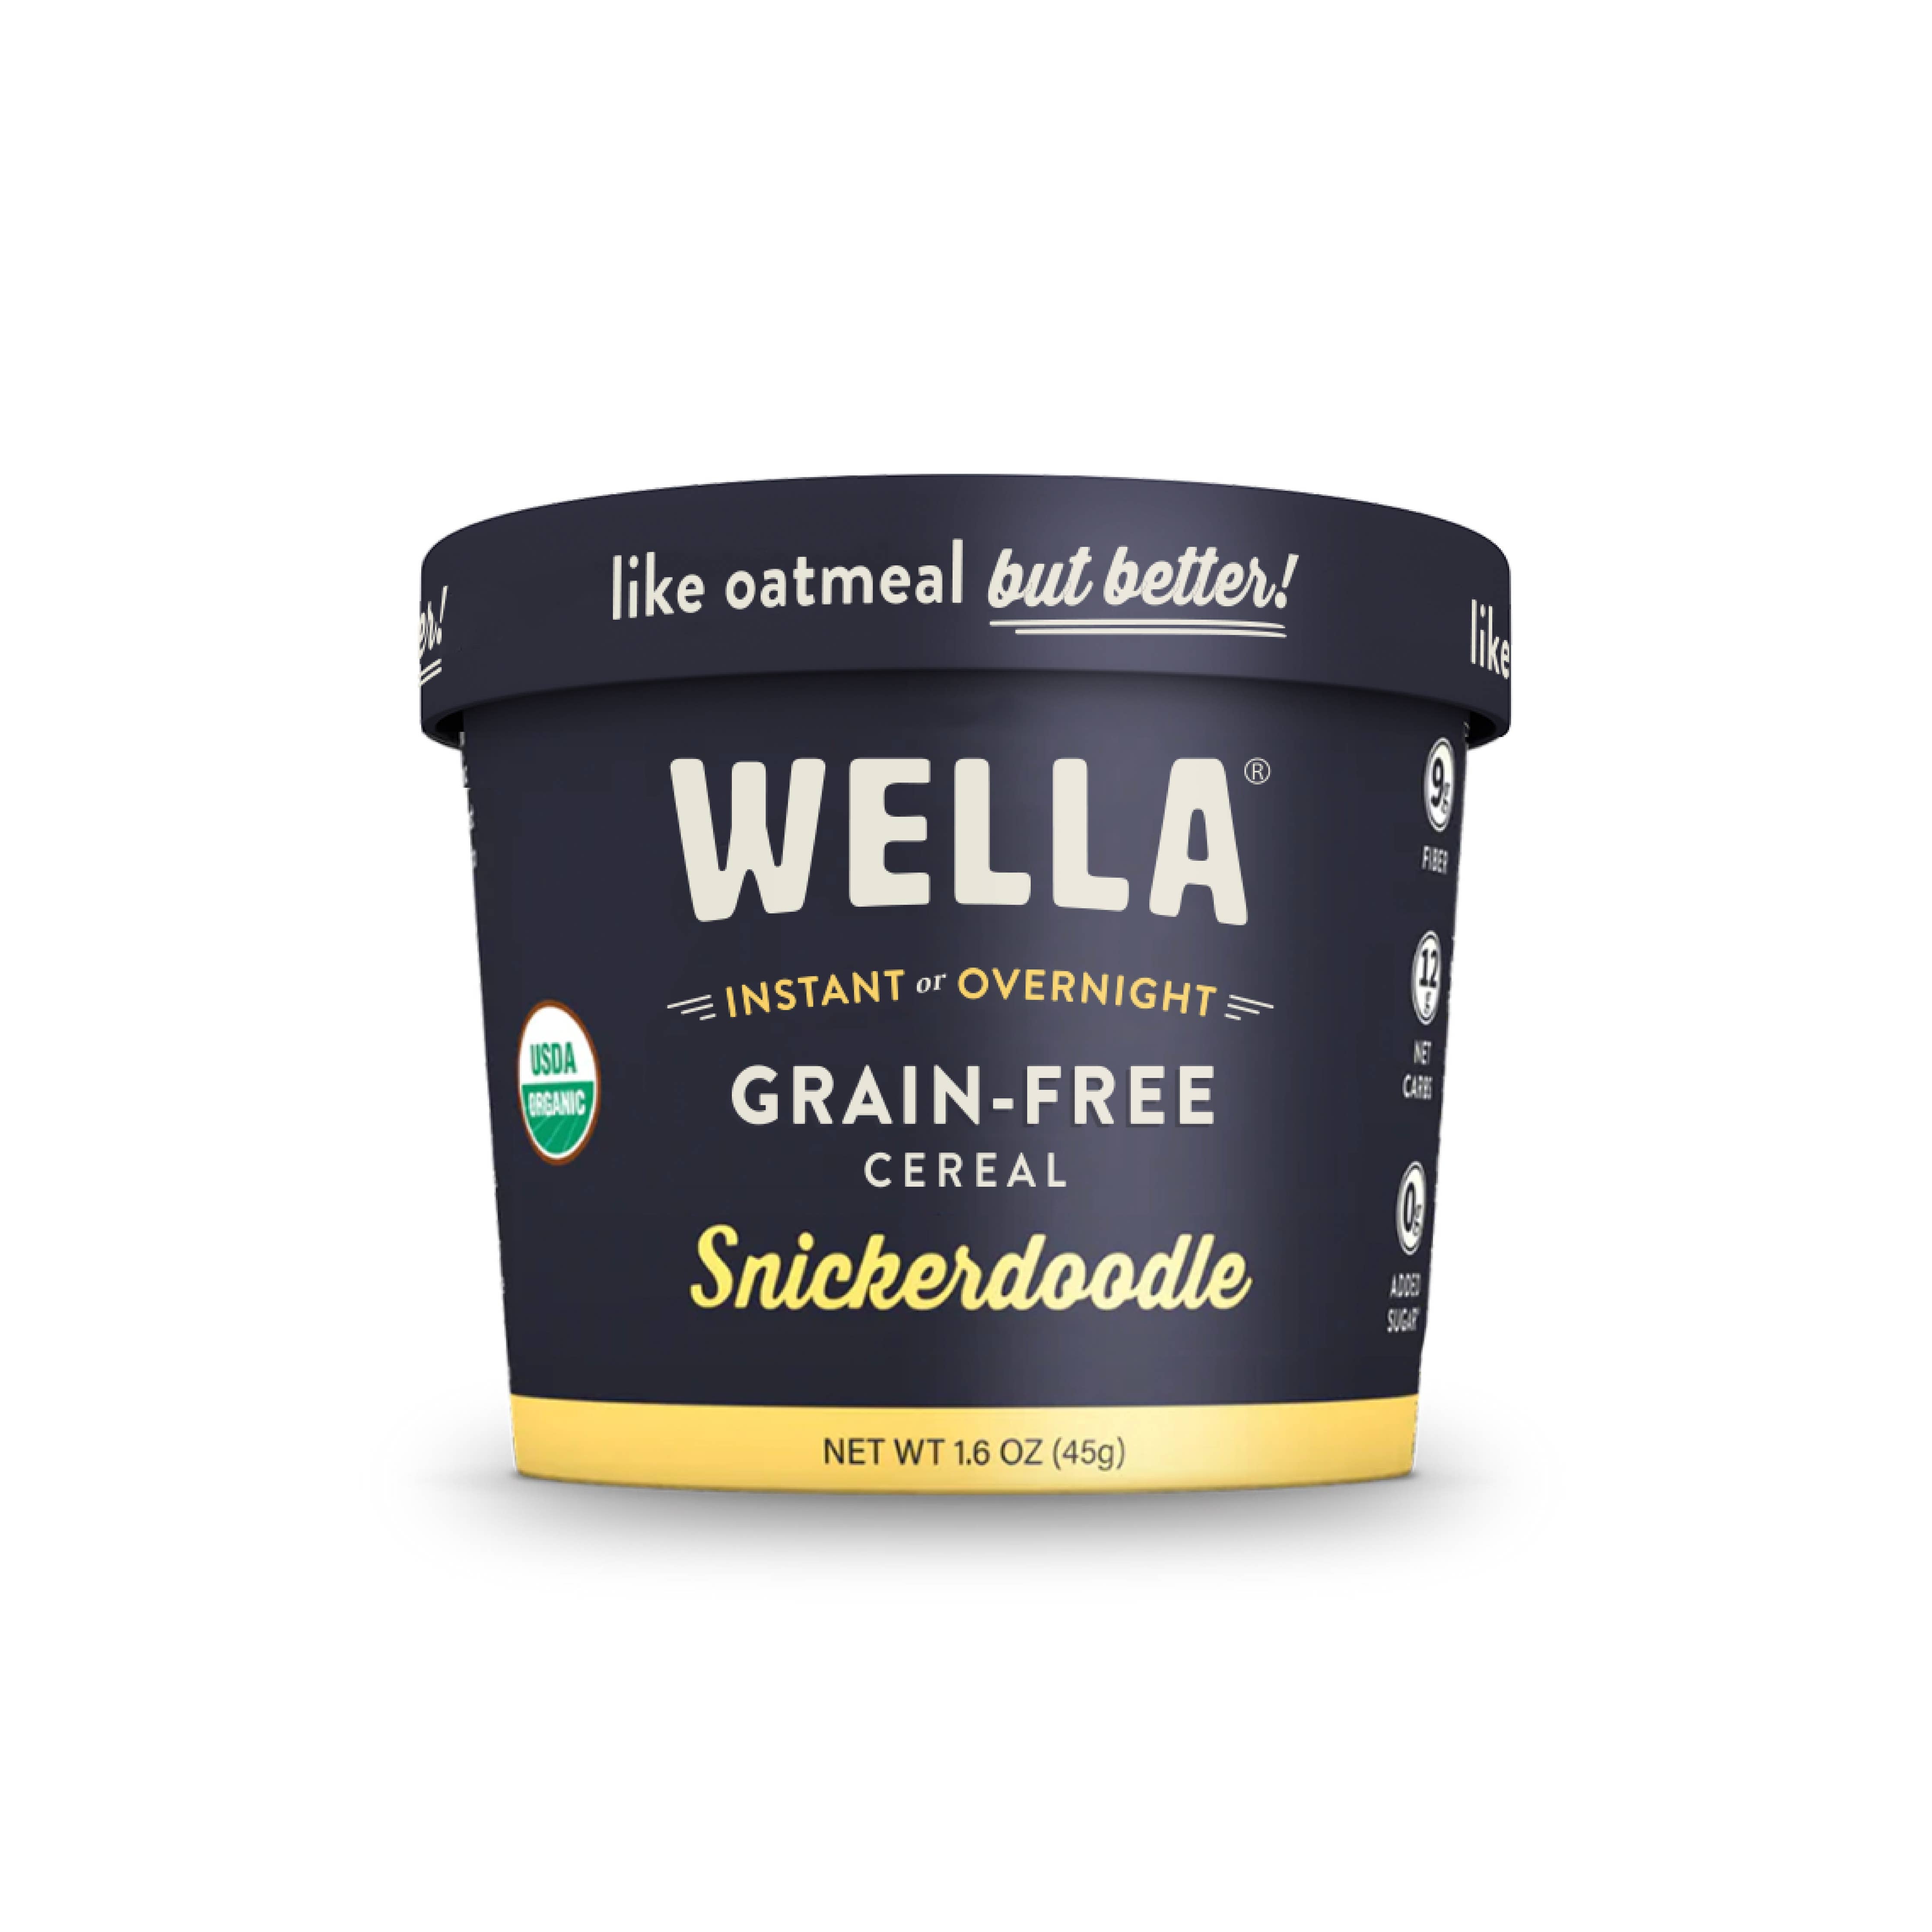 Wella Grain-Free Cereal Snickerdoodle Cup